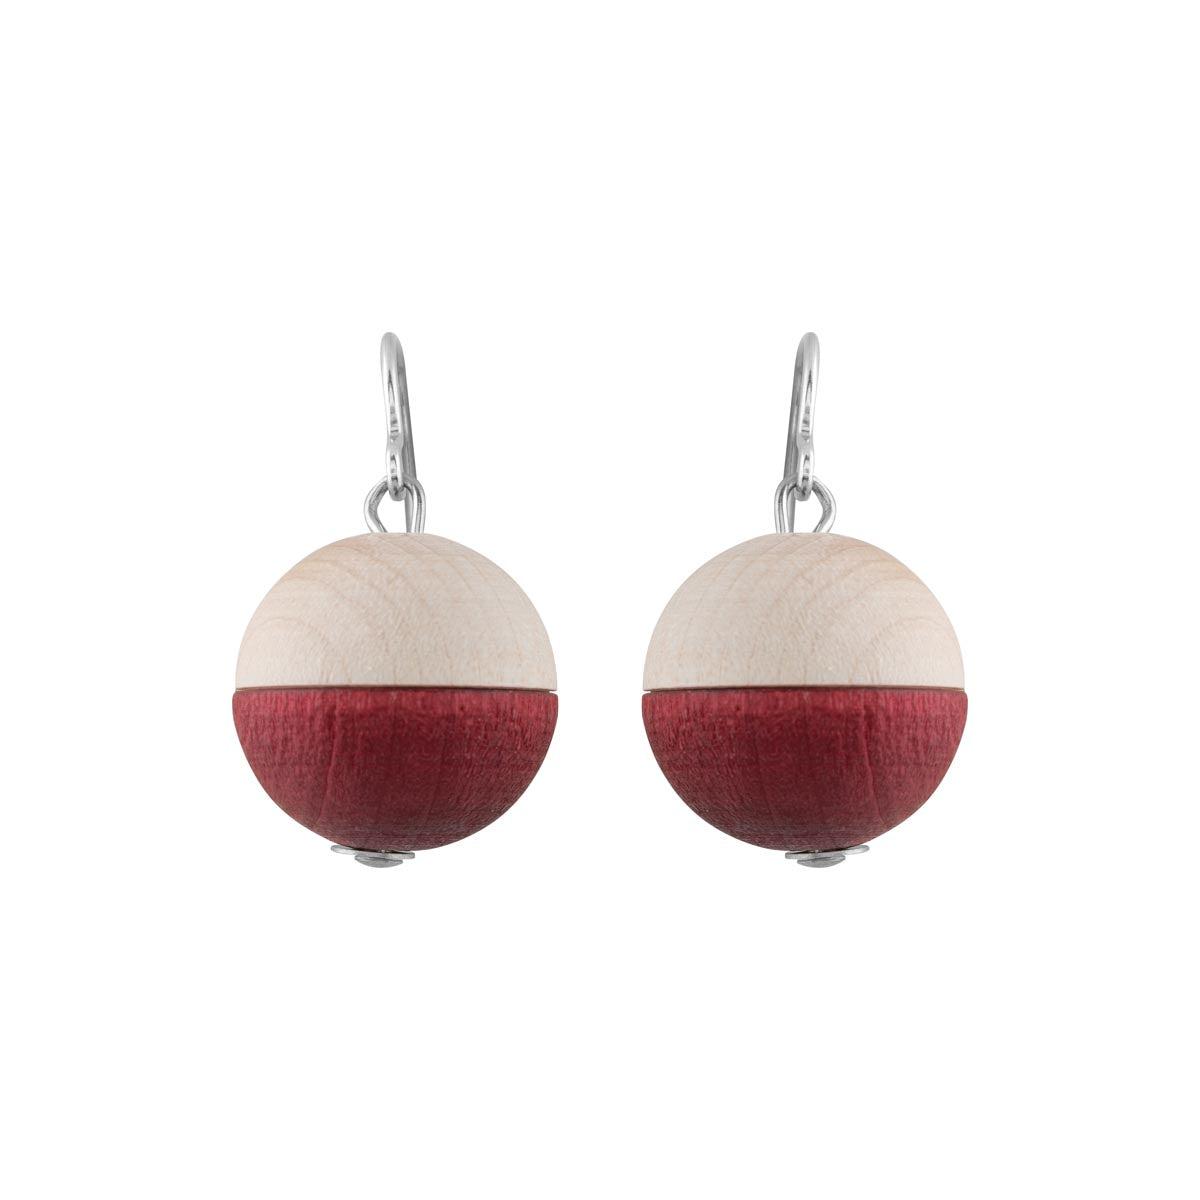 Leila earrings, wine red